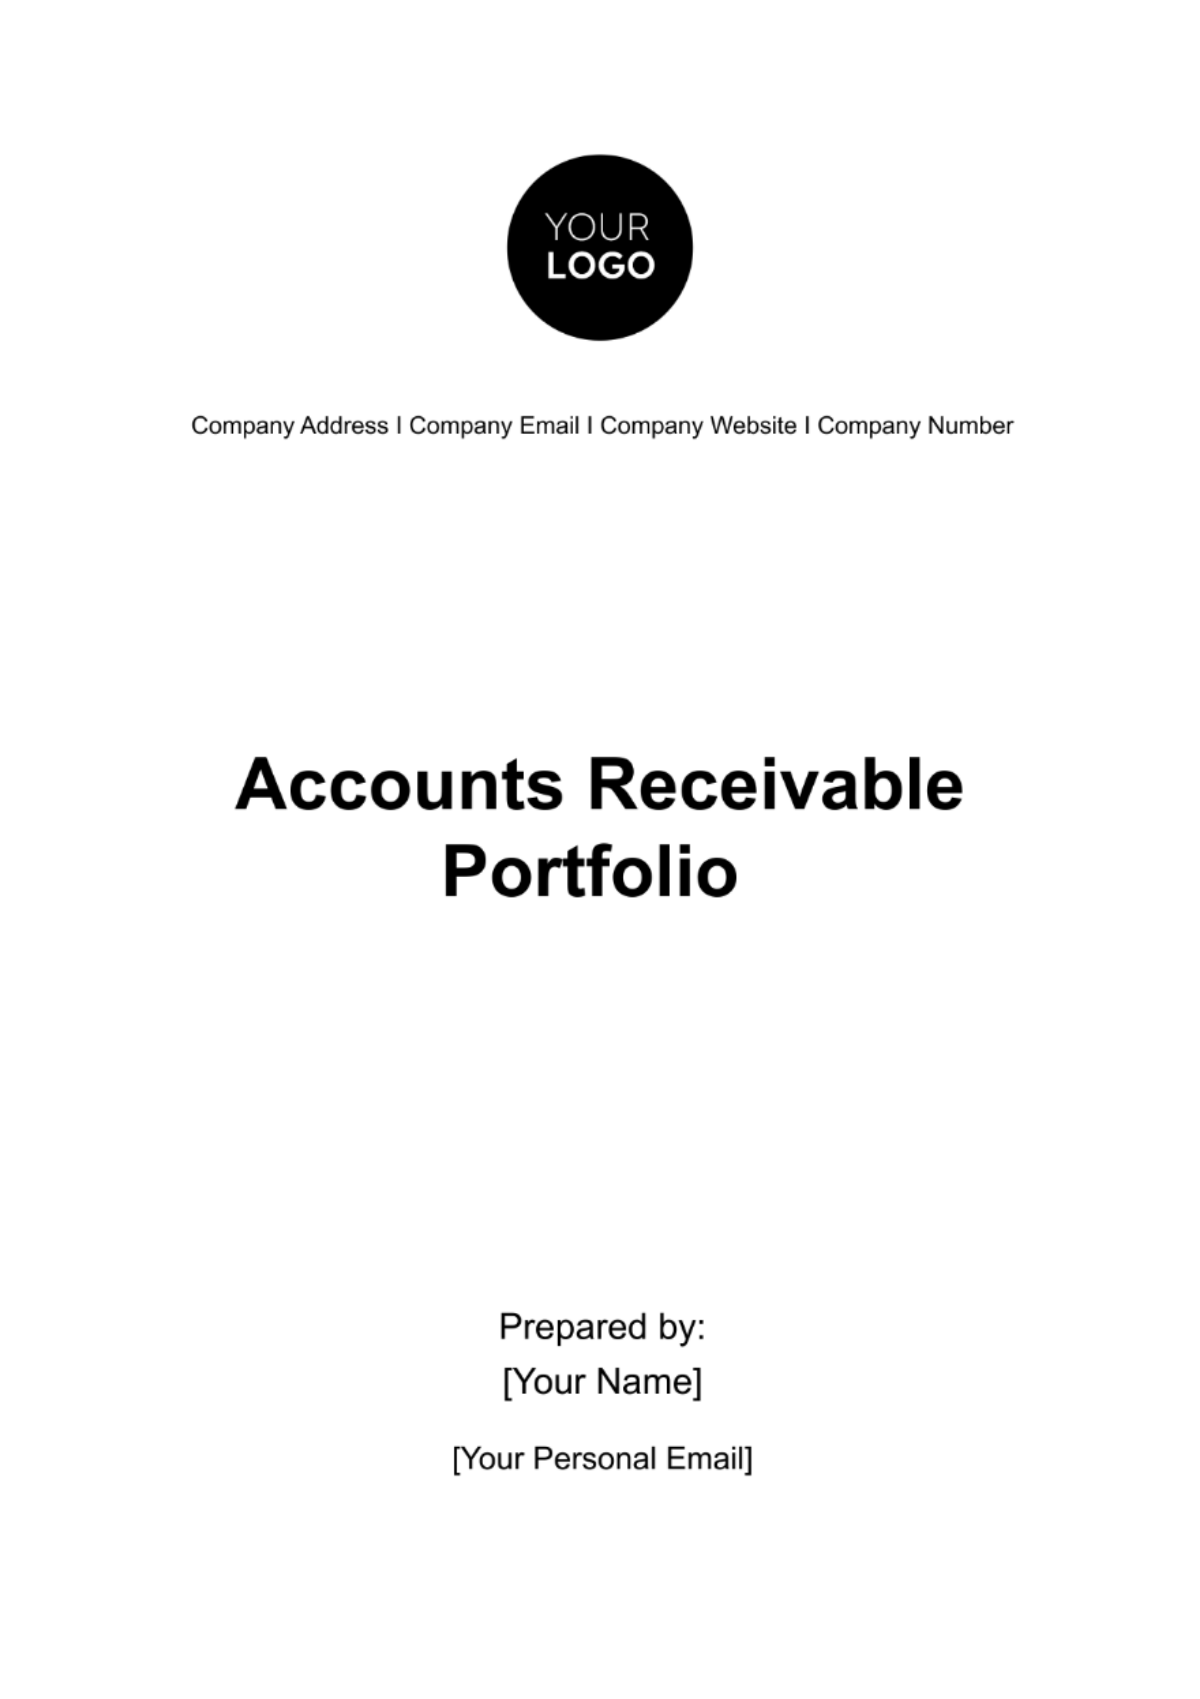 Accounts Receivable Portfolio Template